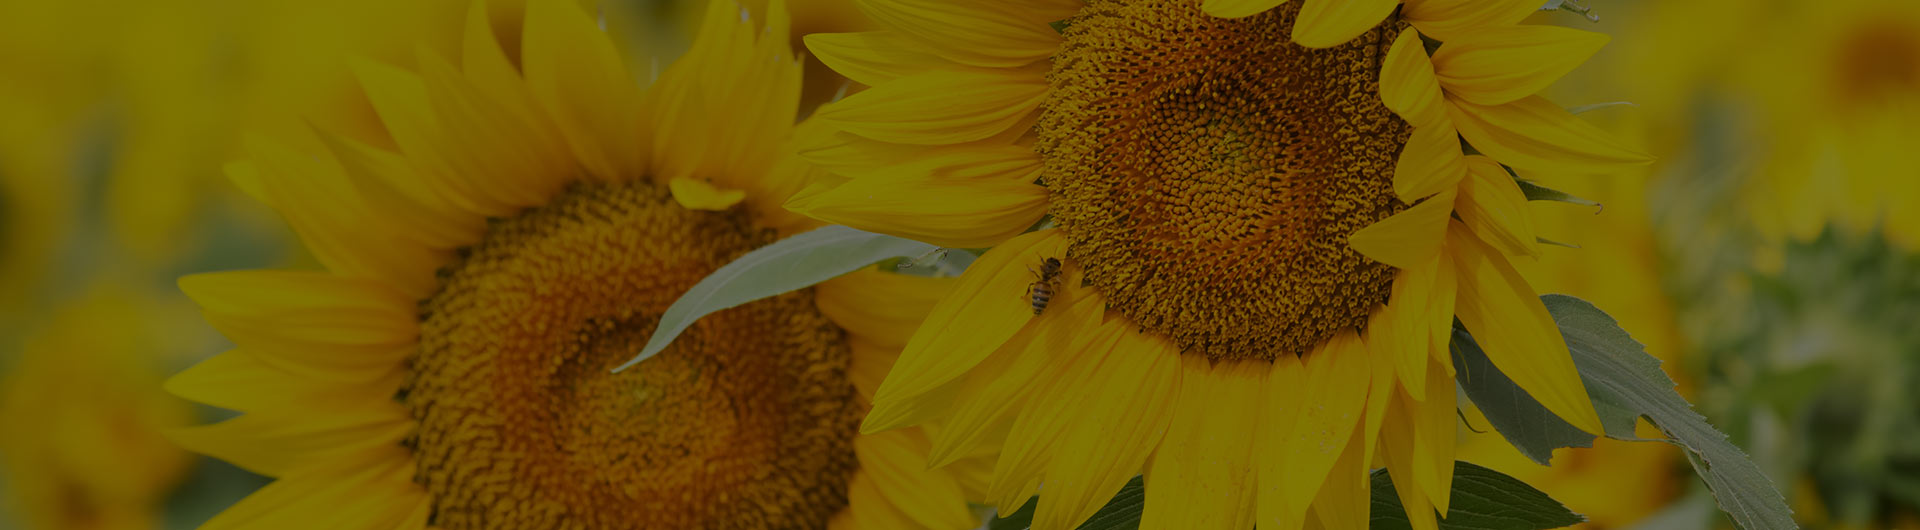 Sunflowers, Kansas' state flower.